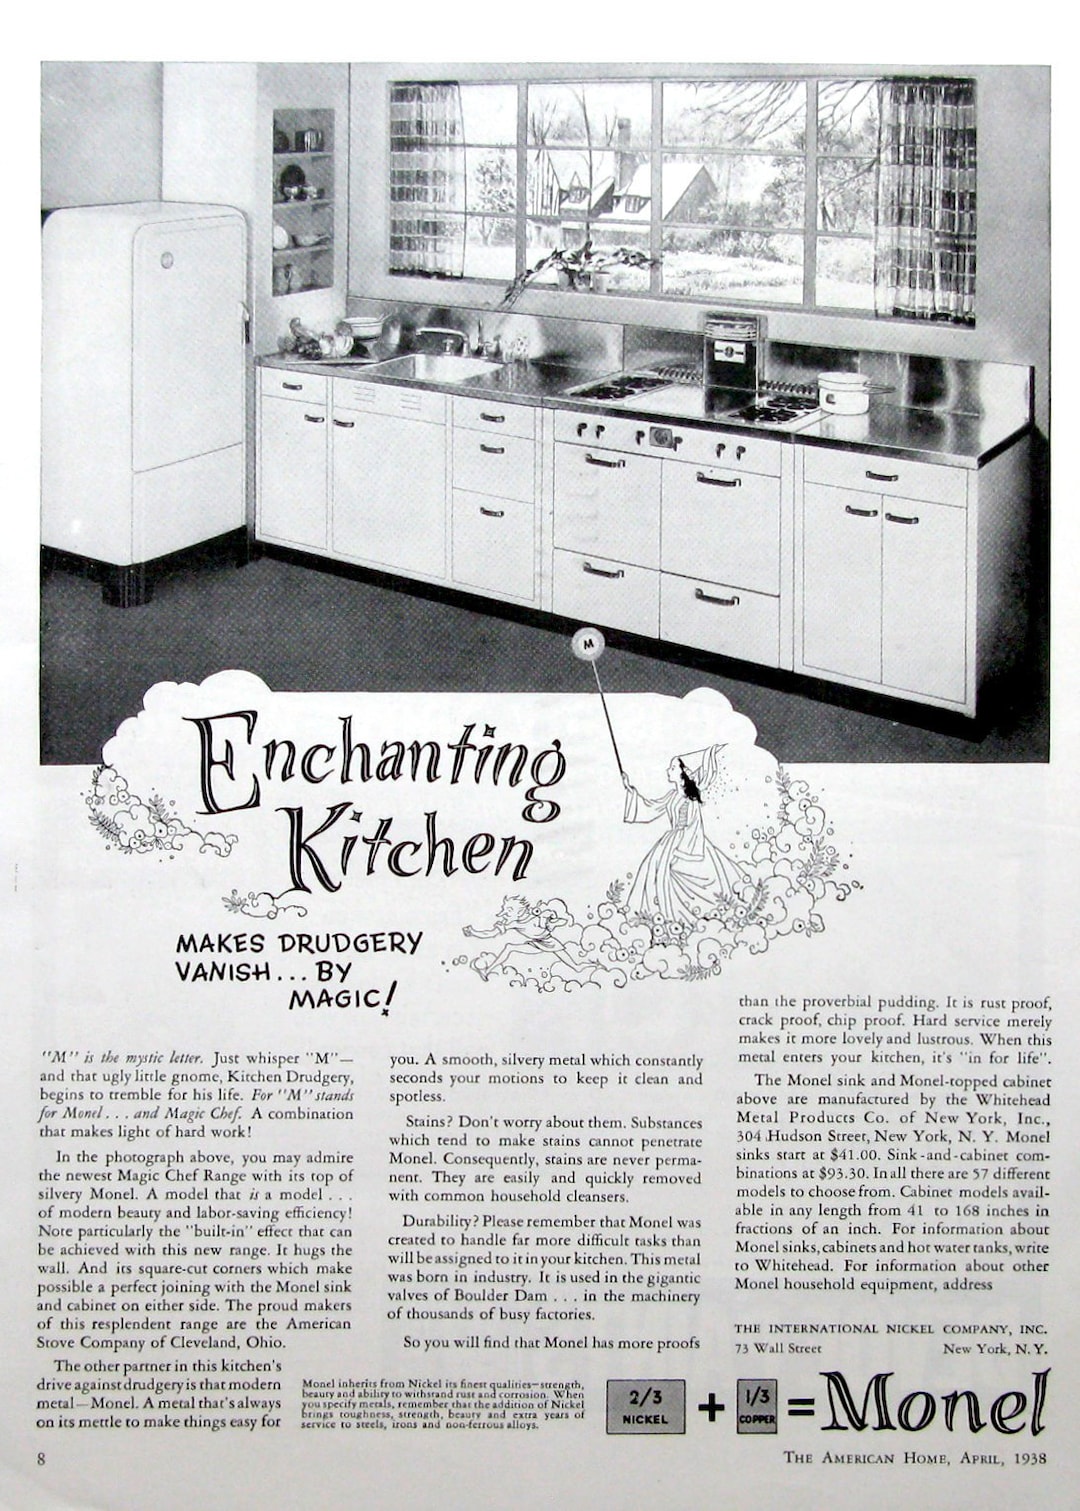 Antique Advertising Tin, Nevr-dull Polishing Compound, Retro Tin,  Mid-century Graphics, Great Vintage Advertising, Kitchen, Decor 